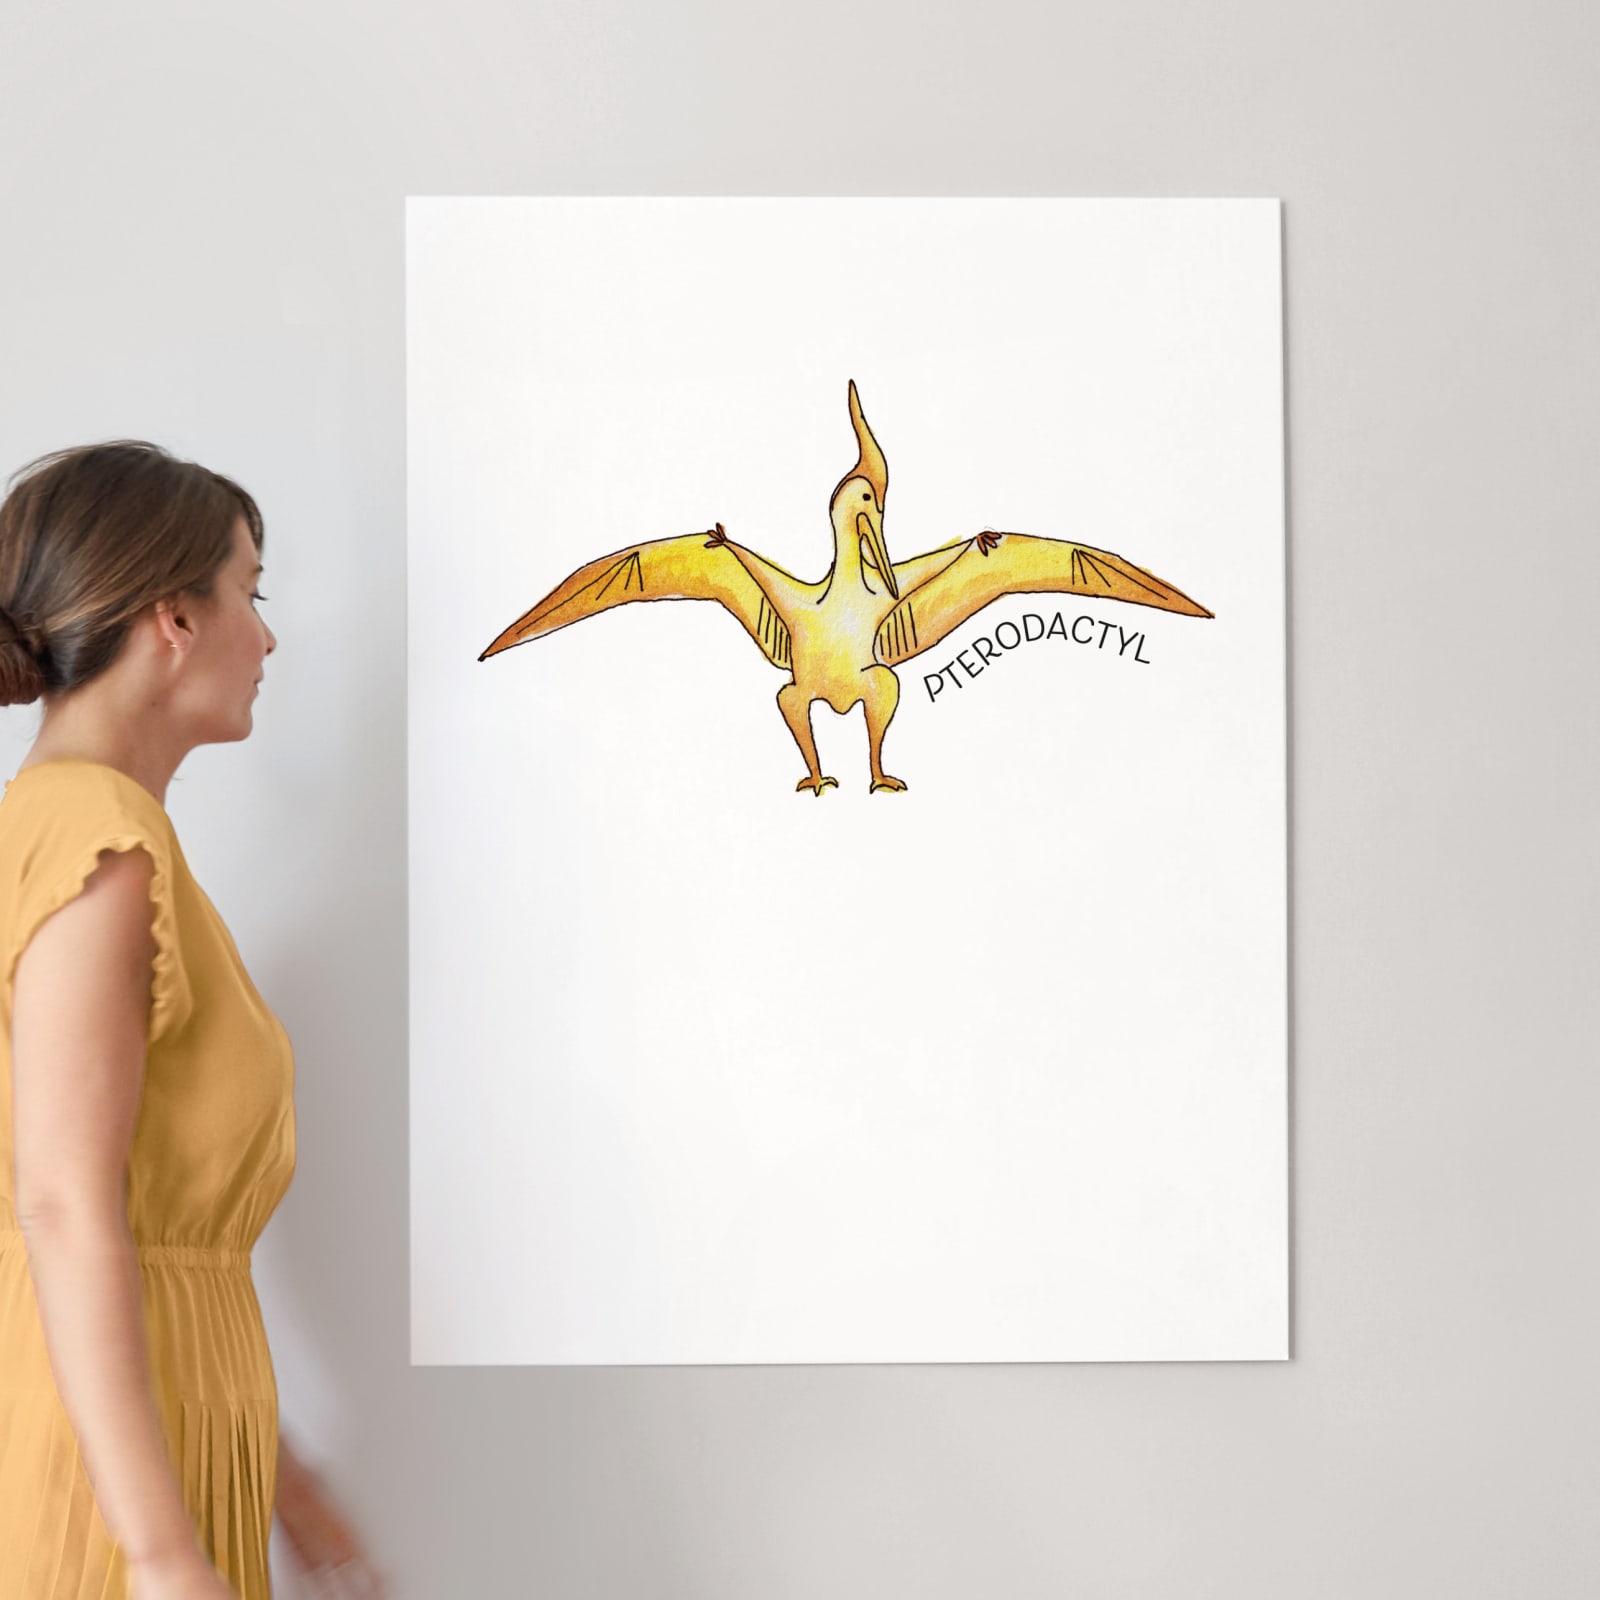 Watercolor Dinosaur Pterodactyl Style 1 Fabric Panel